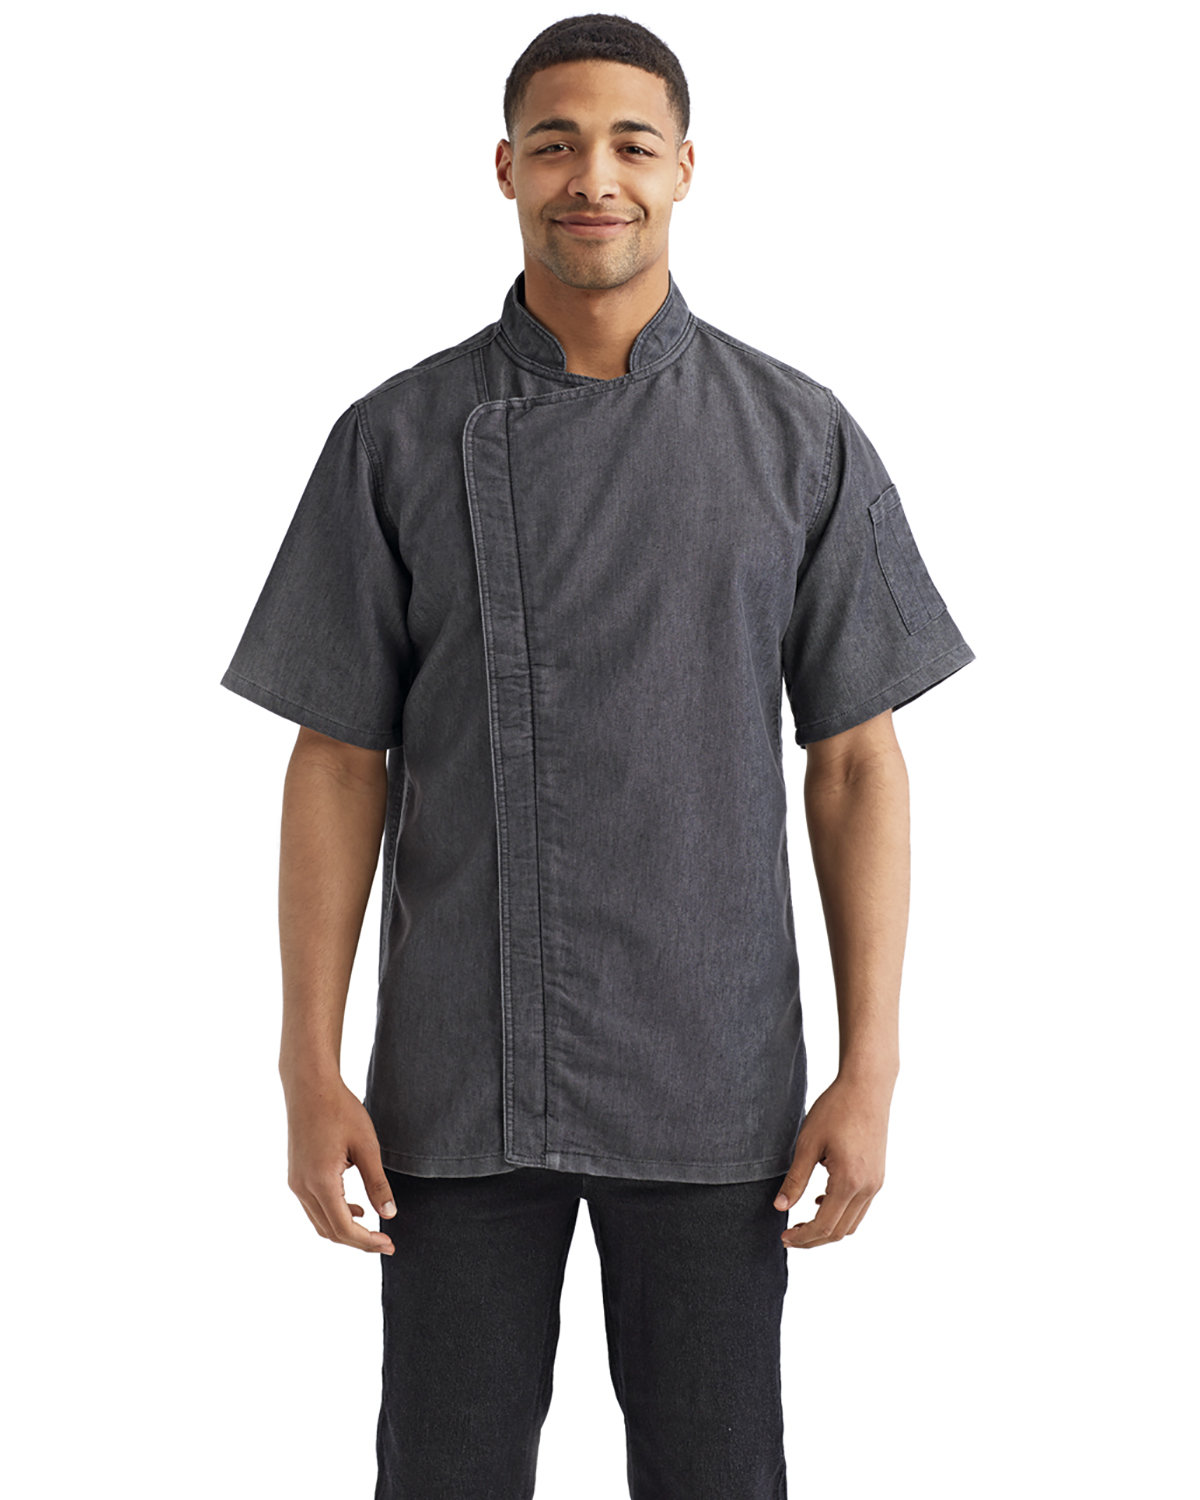 Artisan Collection by Reprime Unisex Zip-Close Short Sleeve Chef's Coat BLACK DENIM 